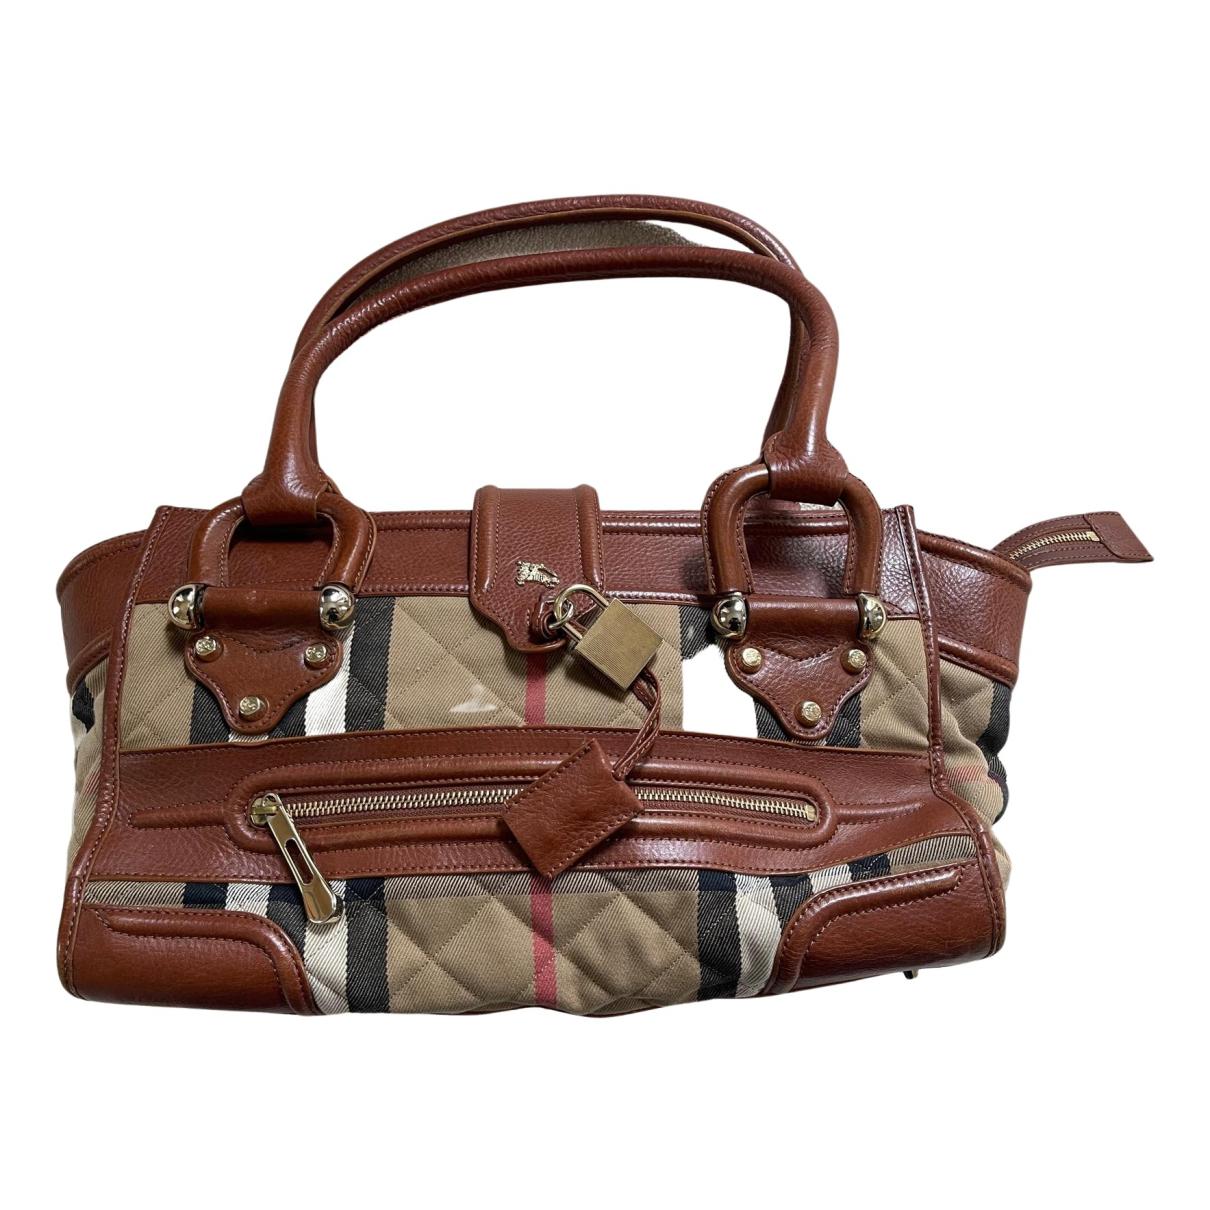 Brook leather handbag Burberry